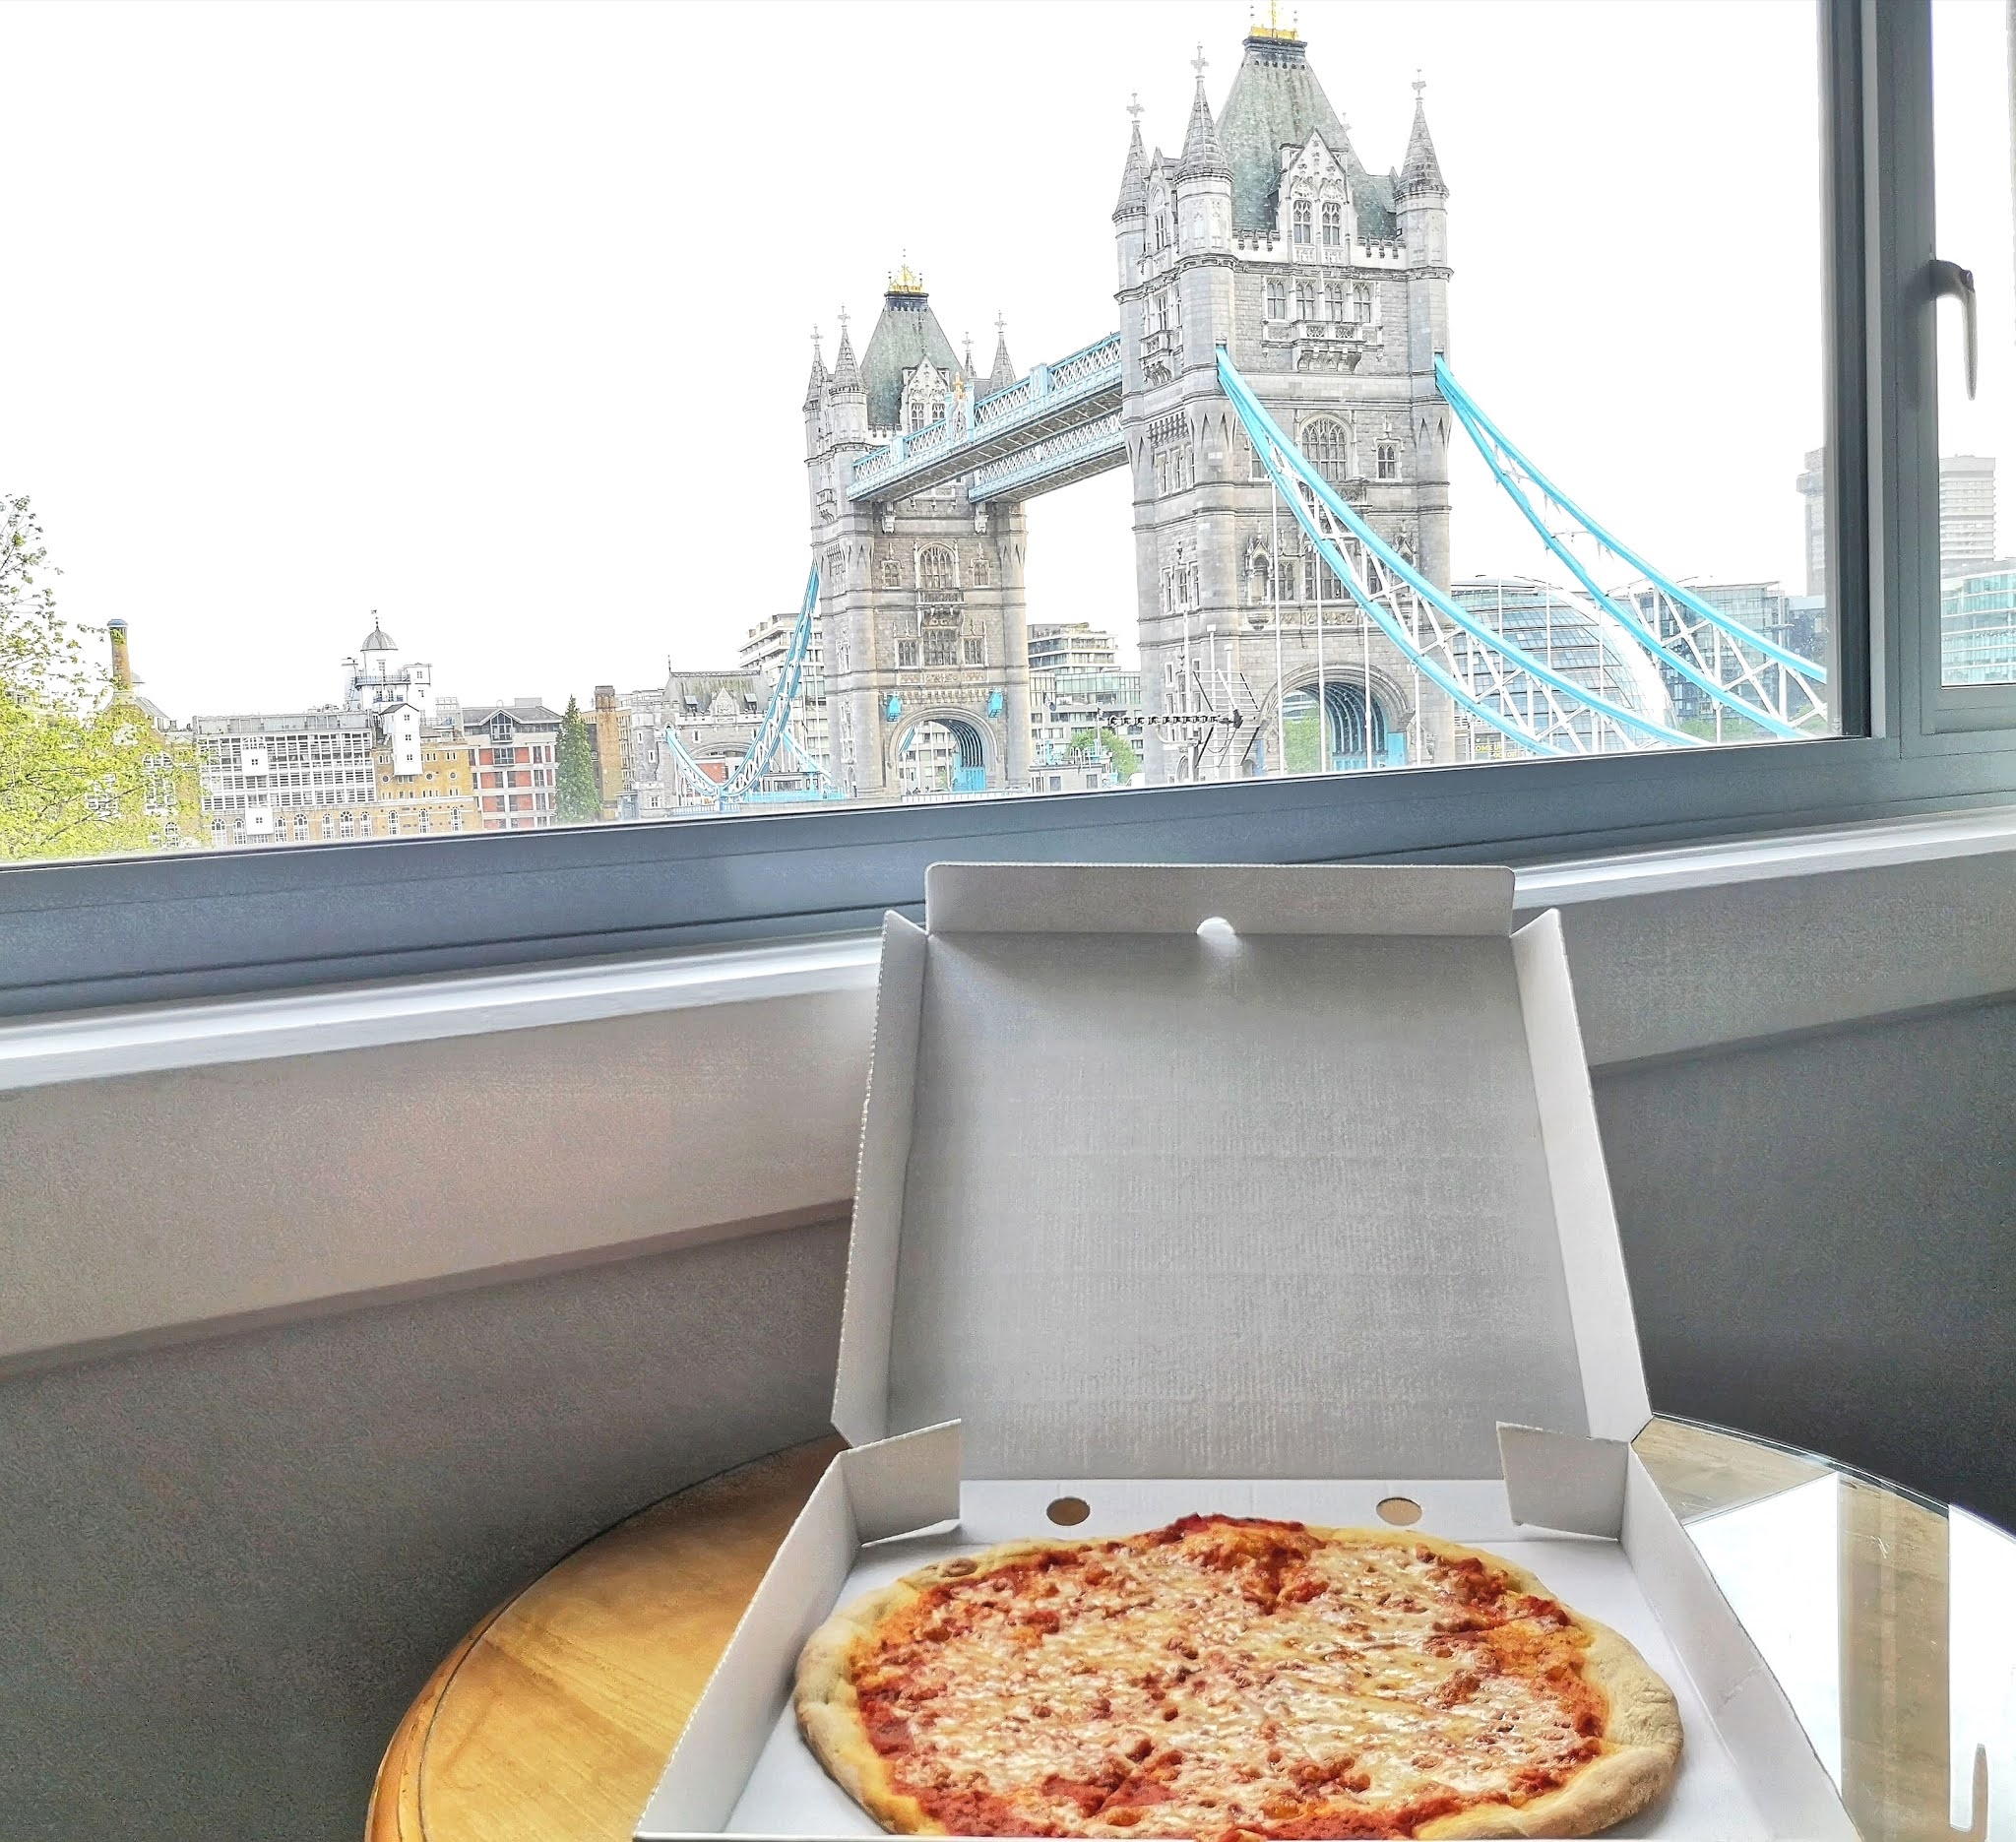 Pizza in London